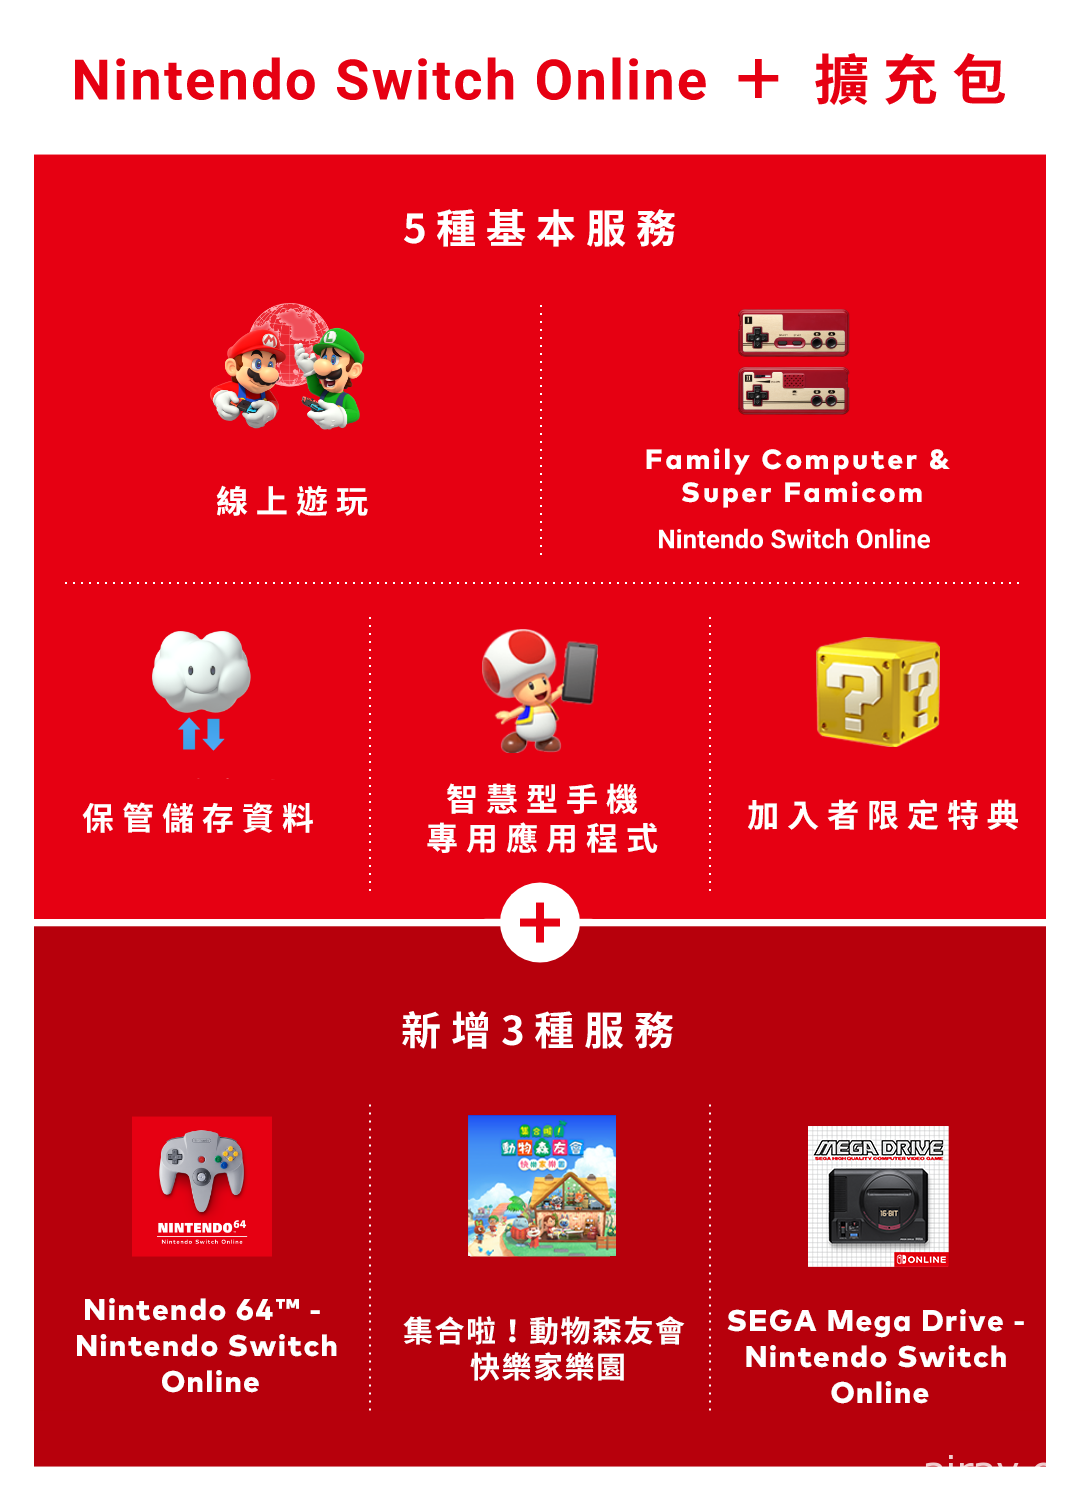 Nintendo Switch Online 新擴充包方案確定 26 日上線 將提供 N64 / MD 經典遊戲